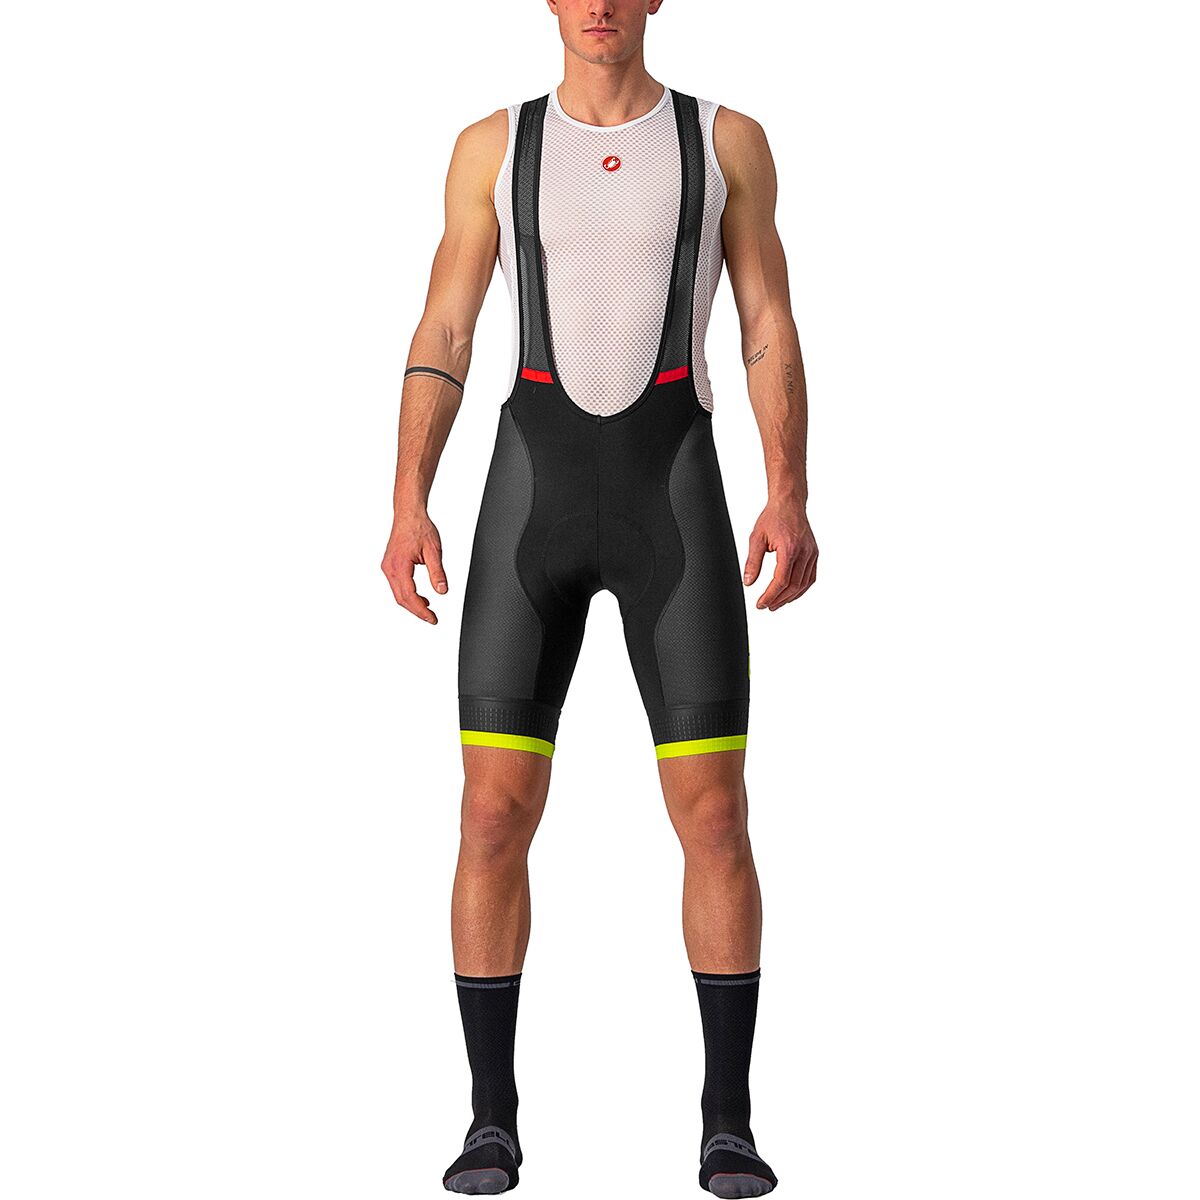 Castelli Competizione Kit Bib Short - Men's